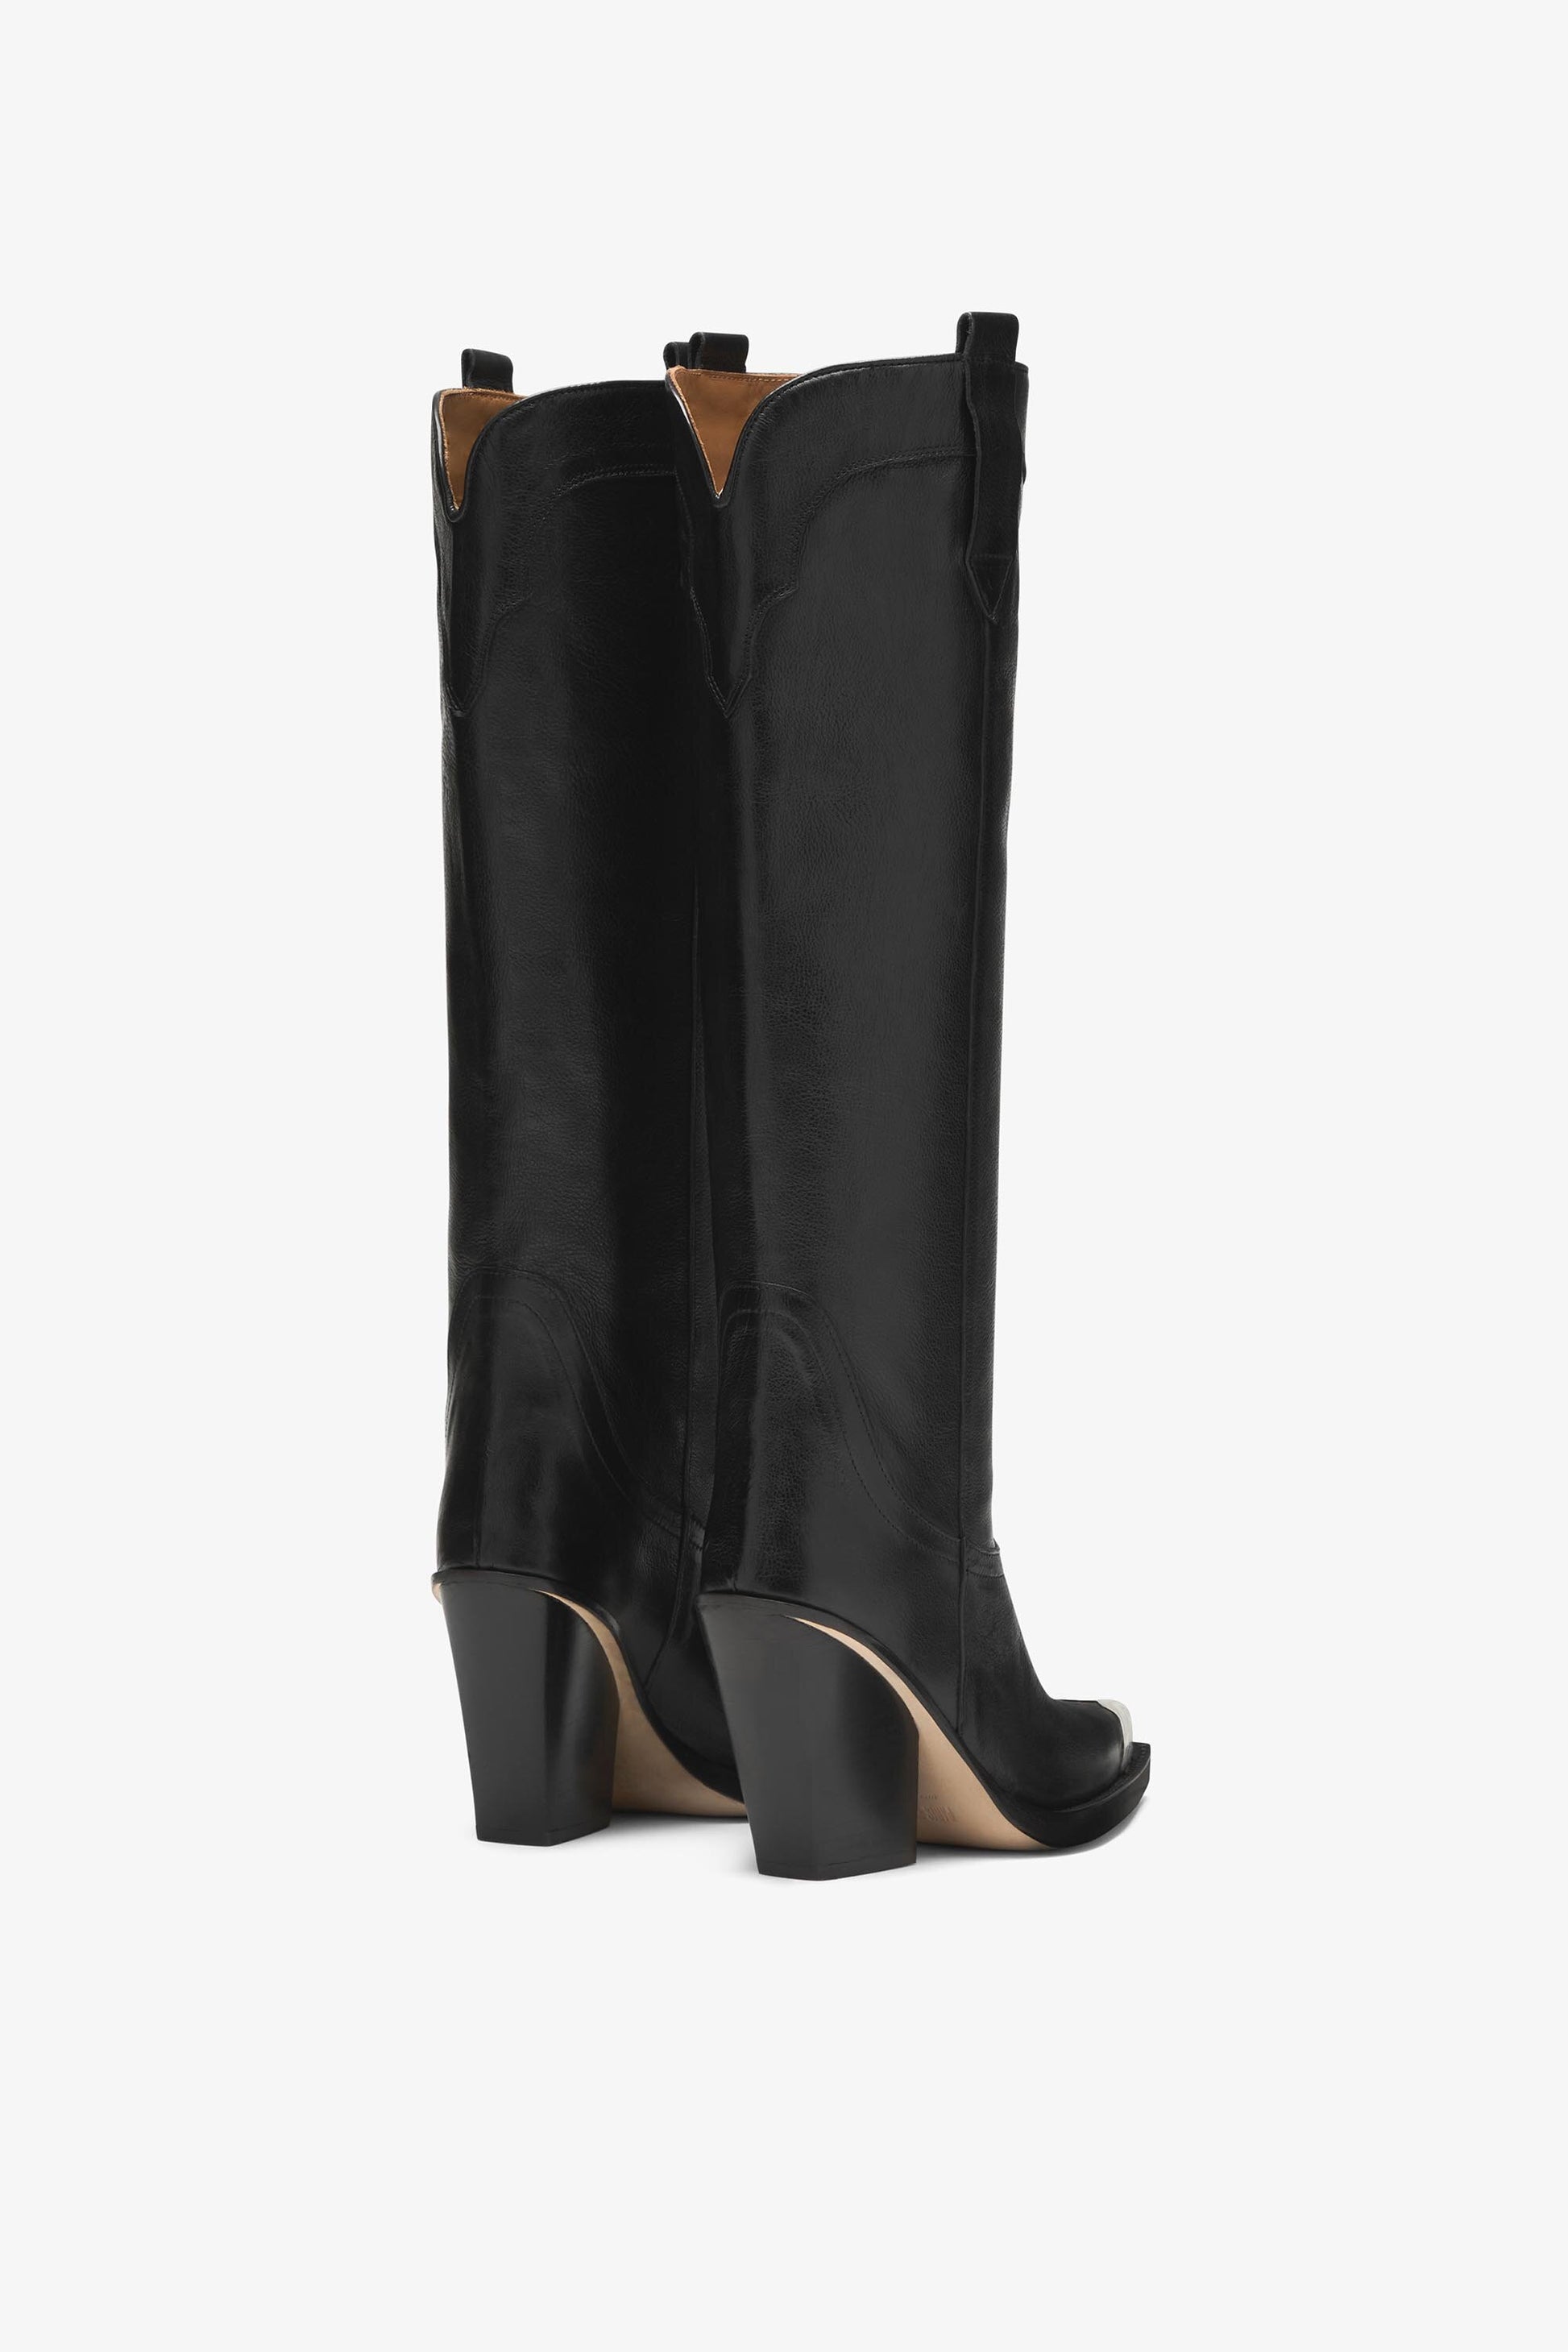 Black leather embellished toe boot